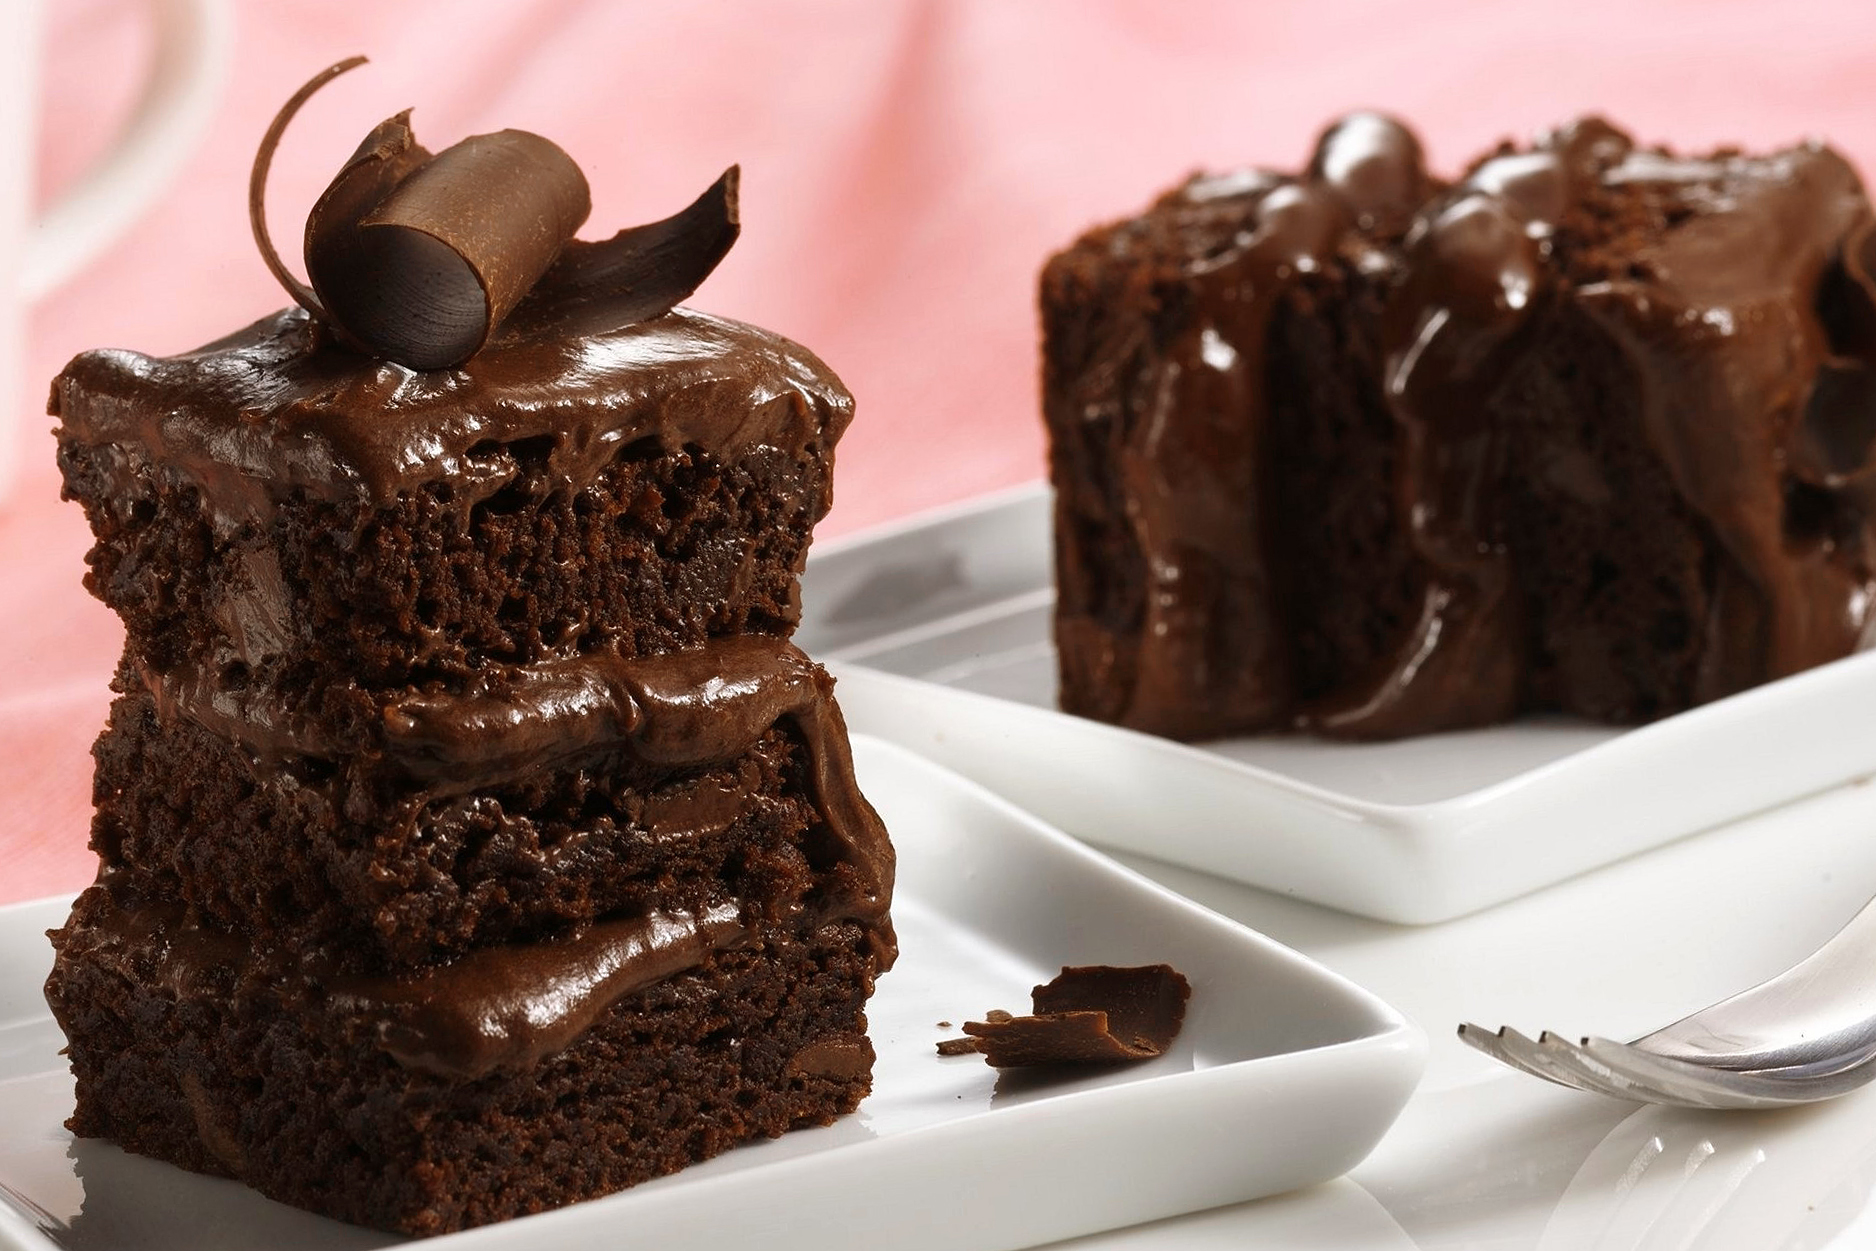 Выпечка брауни. Шоколадные пирожные Брауни. Шоколадный Брауни классический. Торт Брауни шоколадный. Американский десерт Брауни.